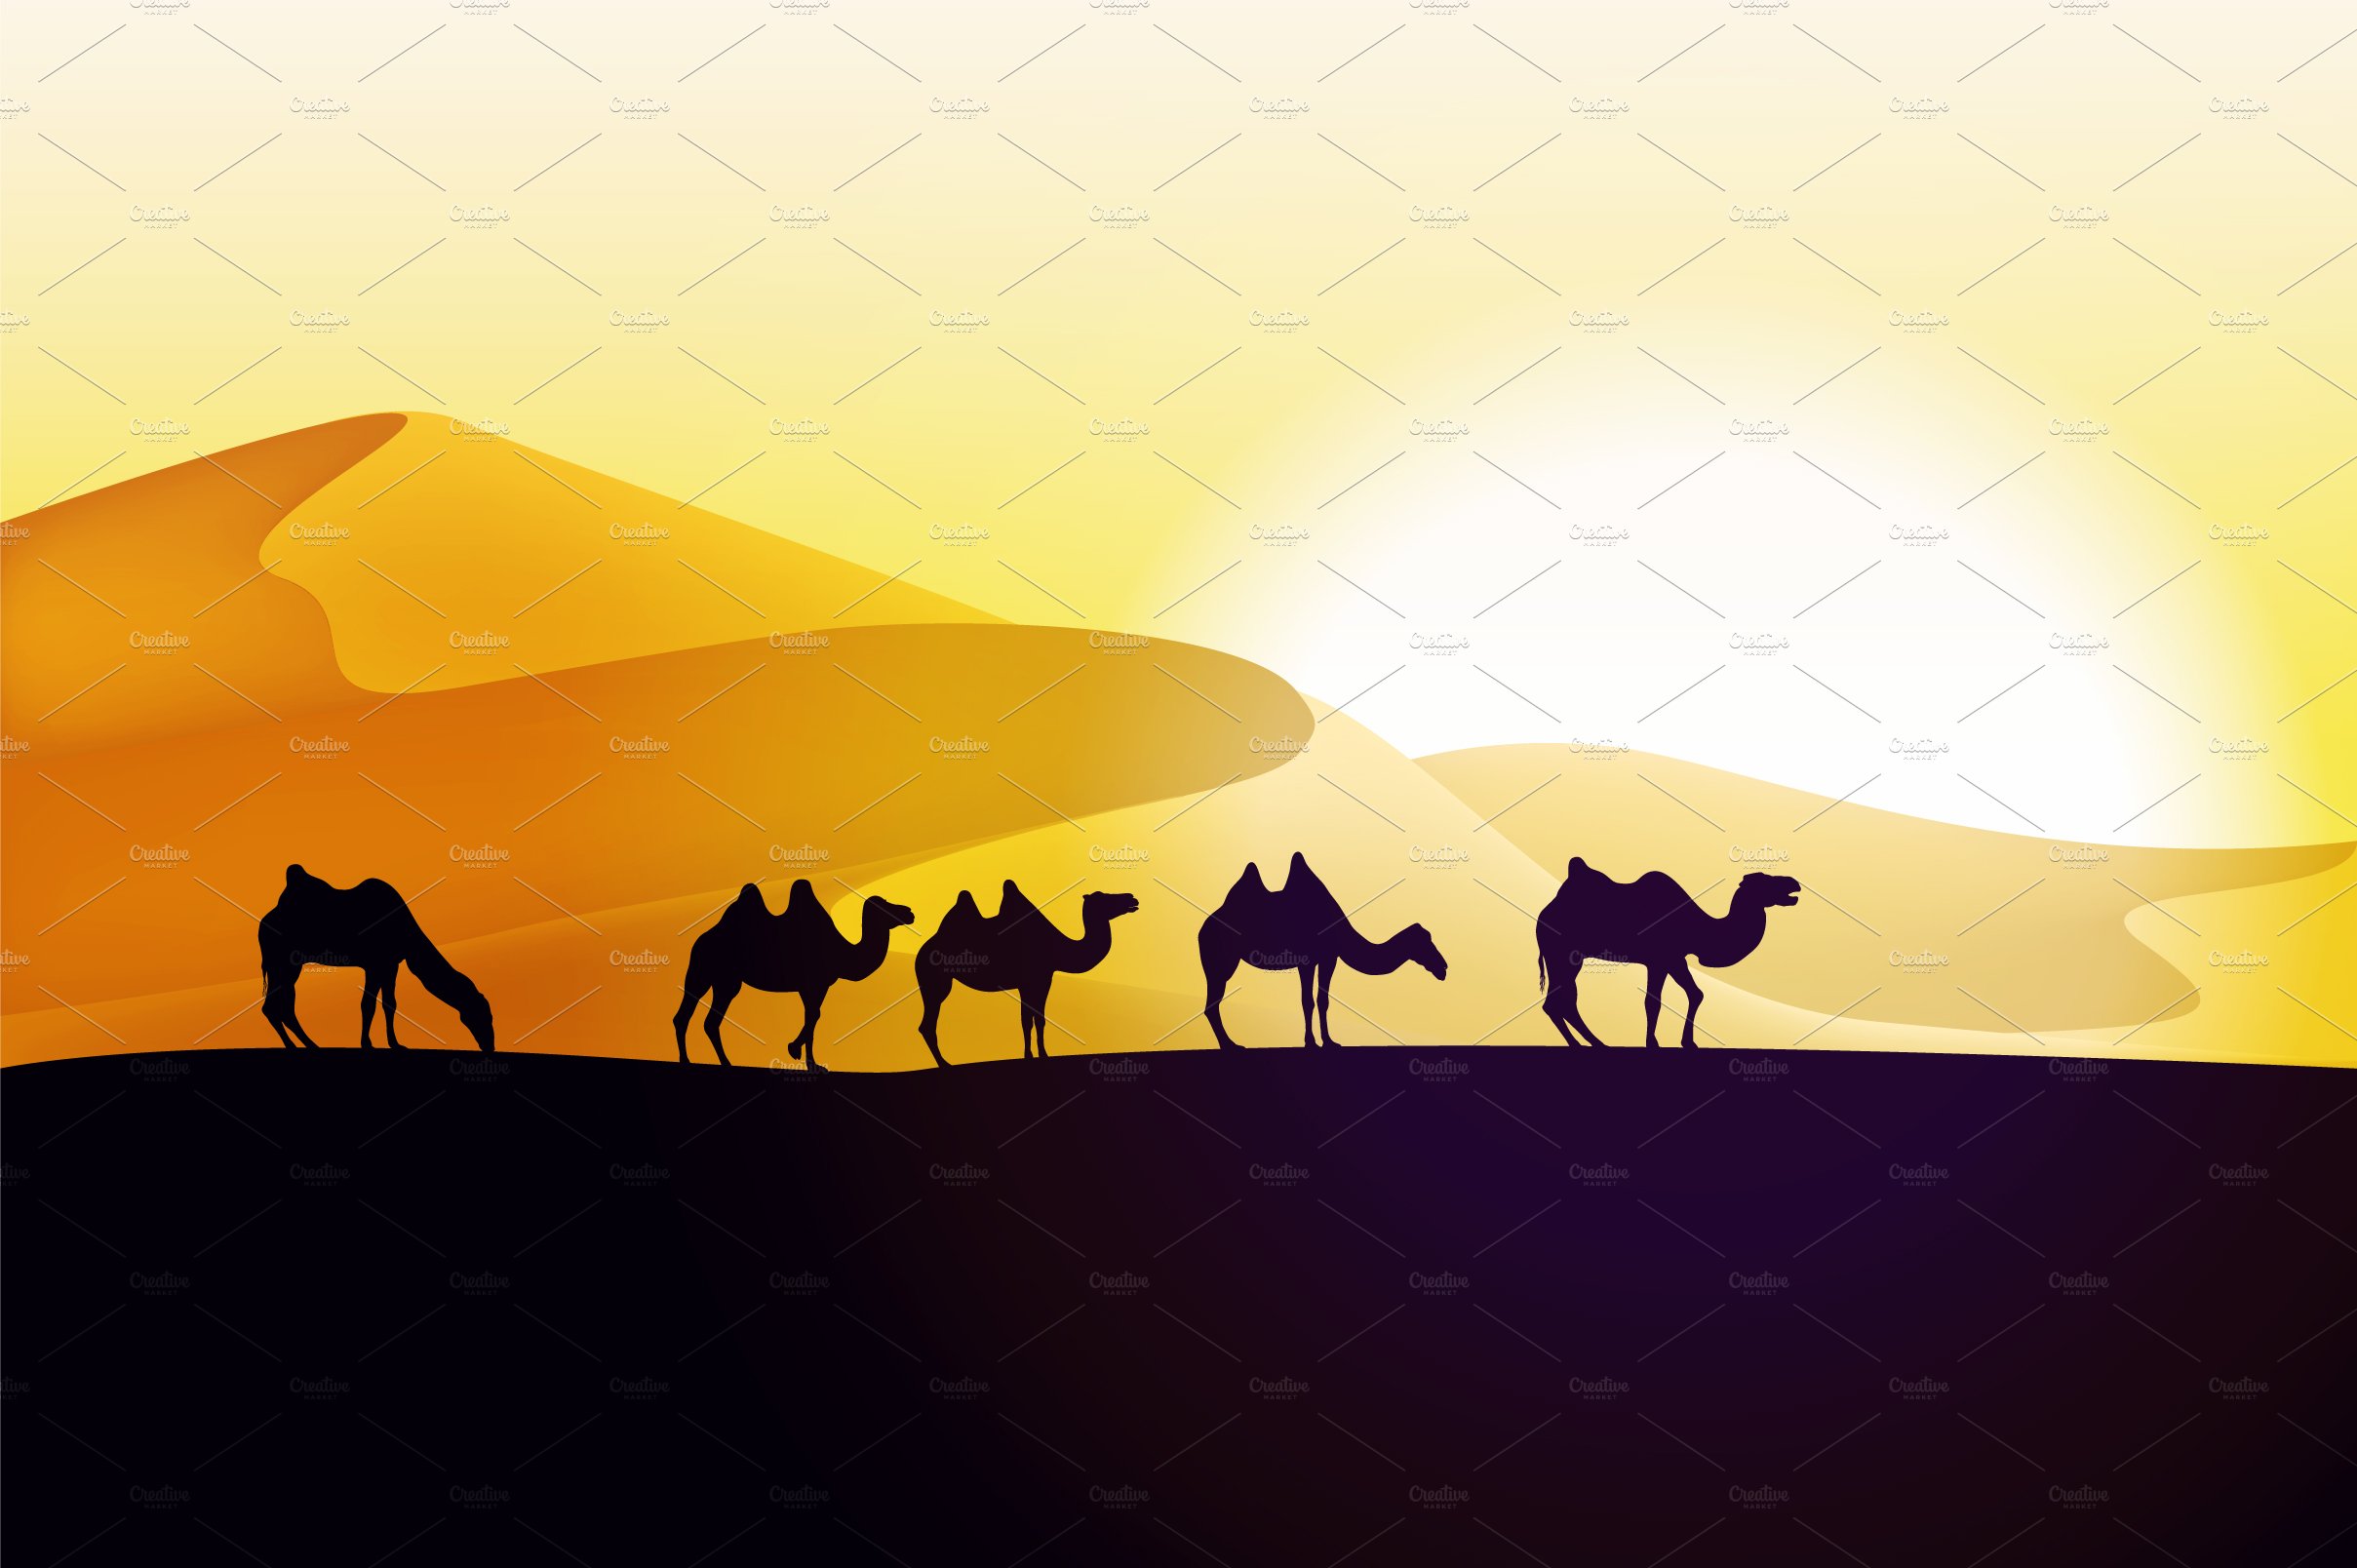 Camels caravan cover image.